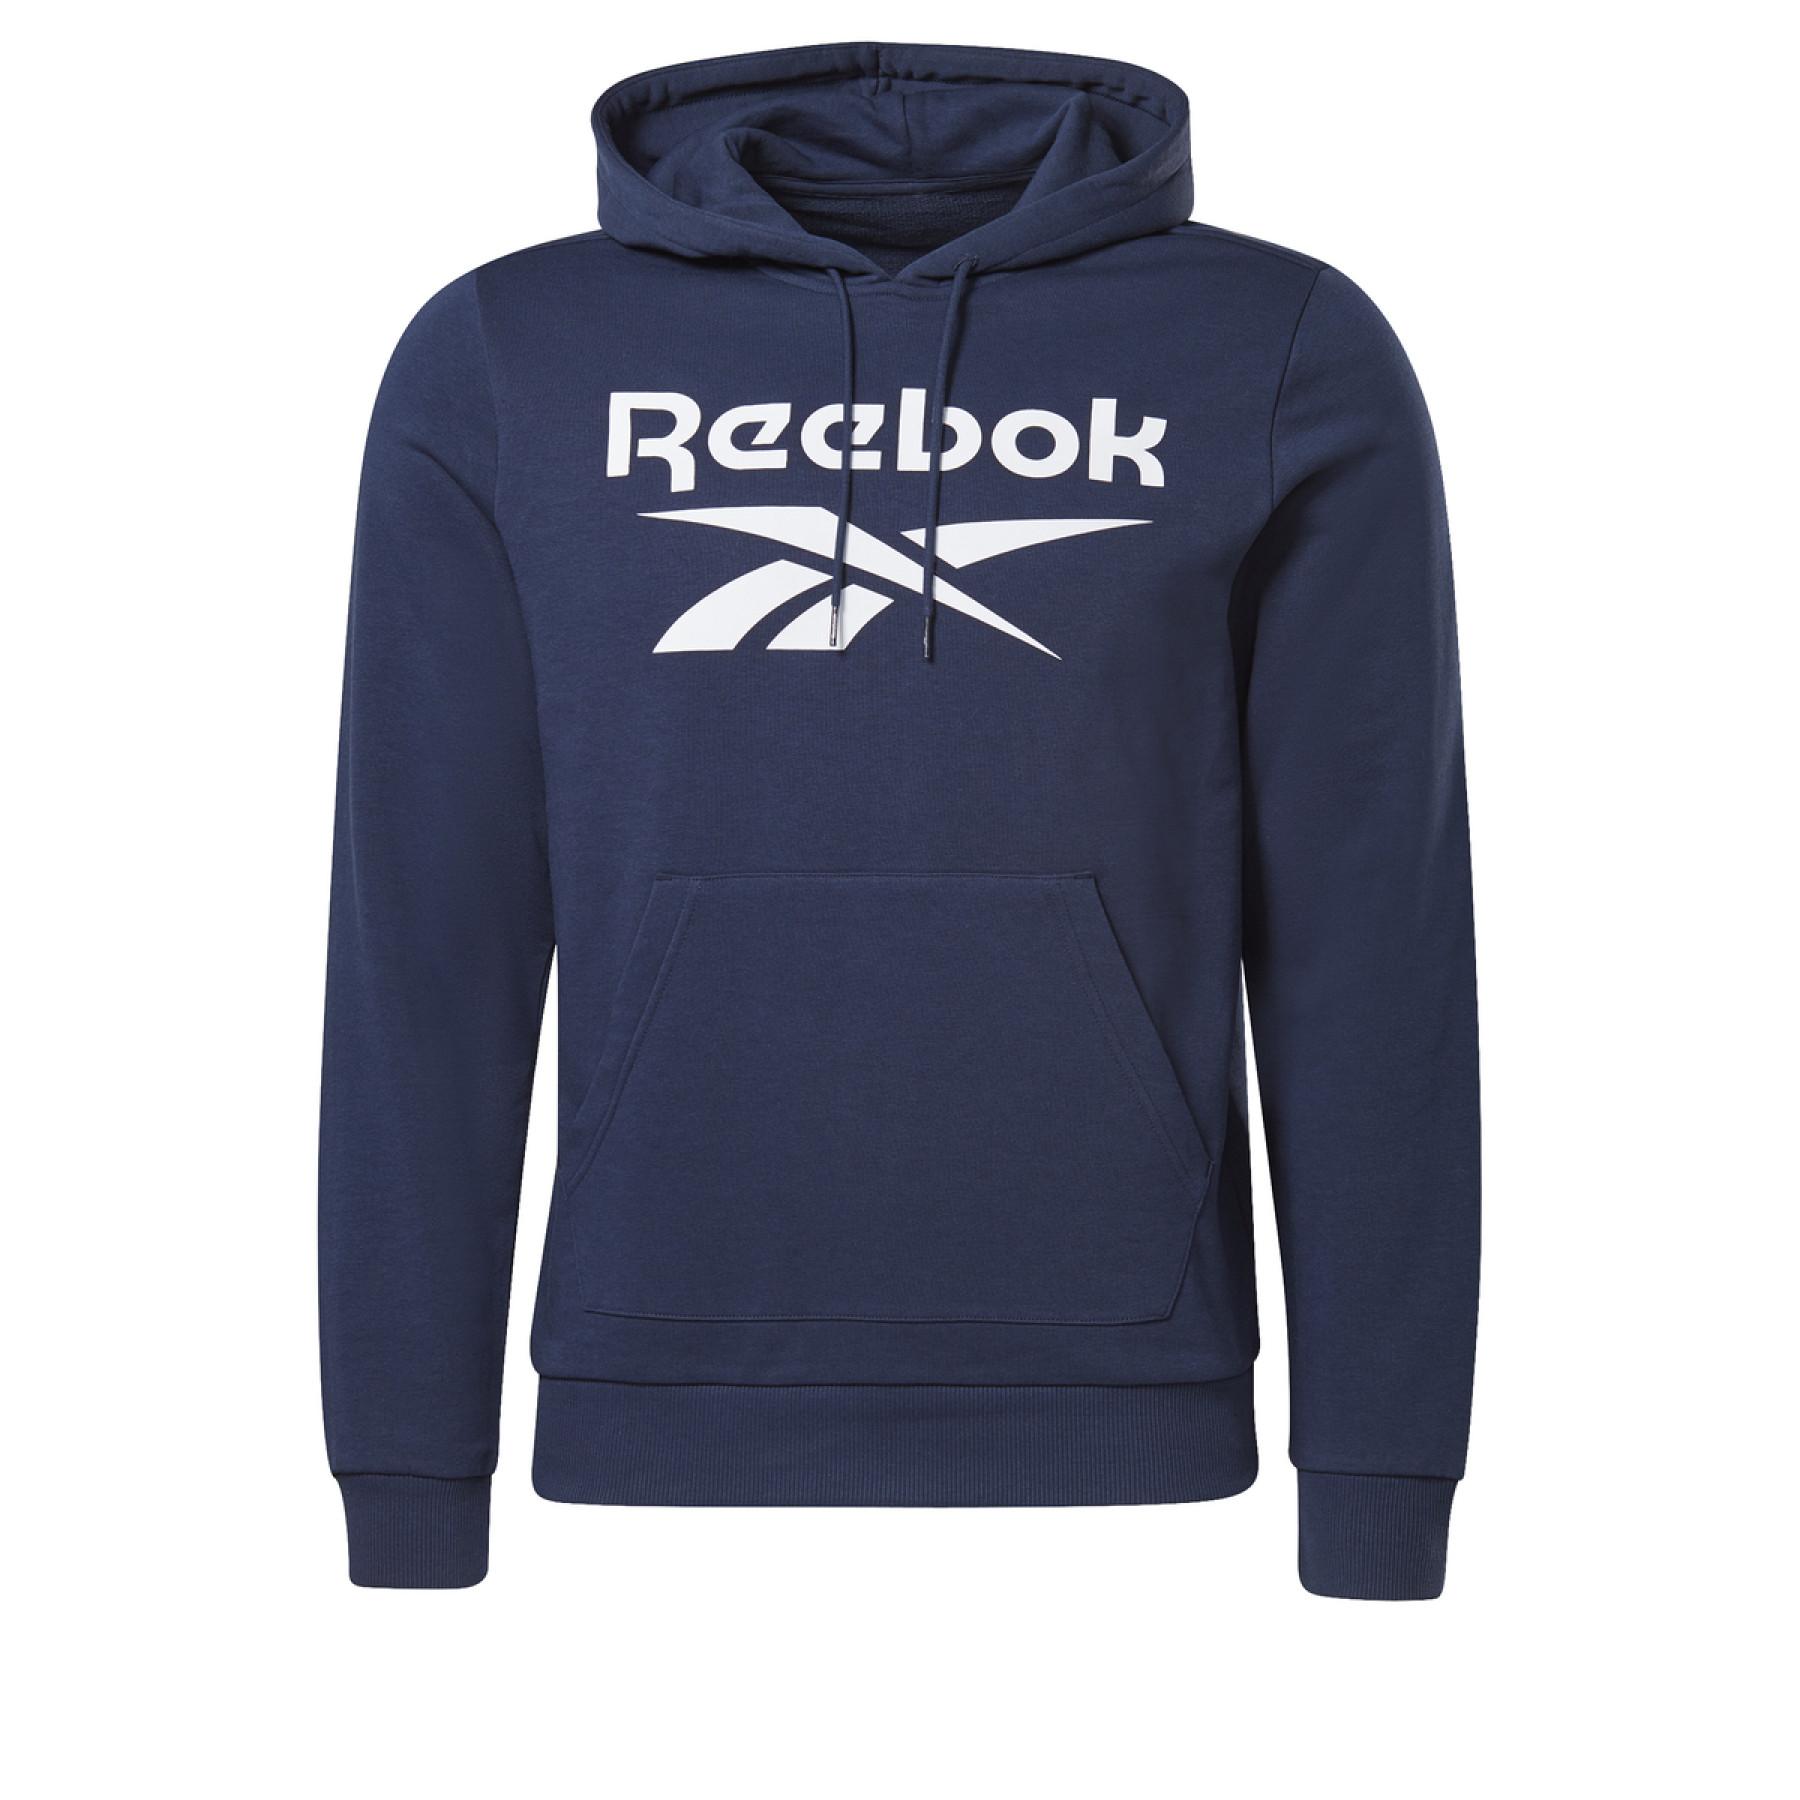 Hooded sweatshirt Reebok Identity Big Logo - Sweatshirts Men - Clothing ...